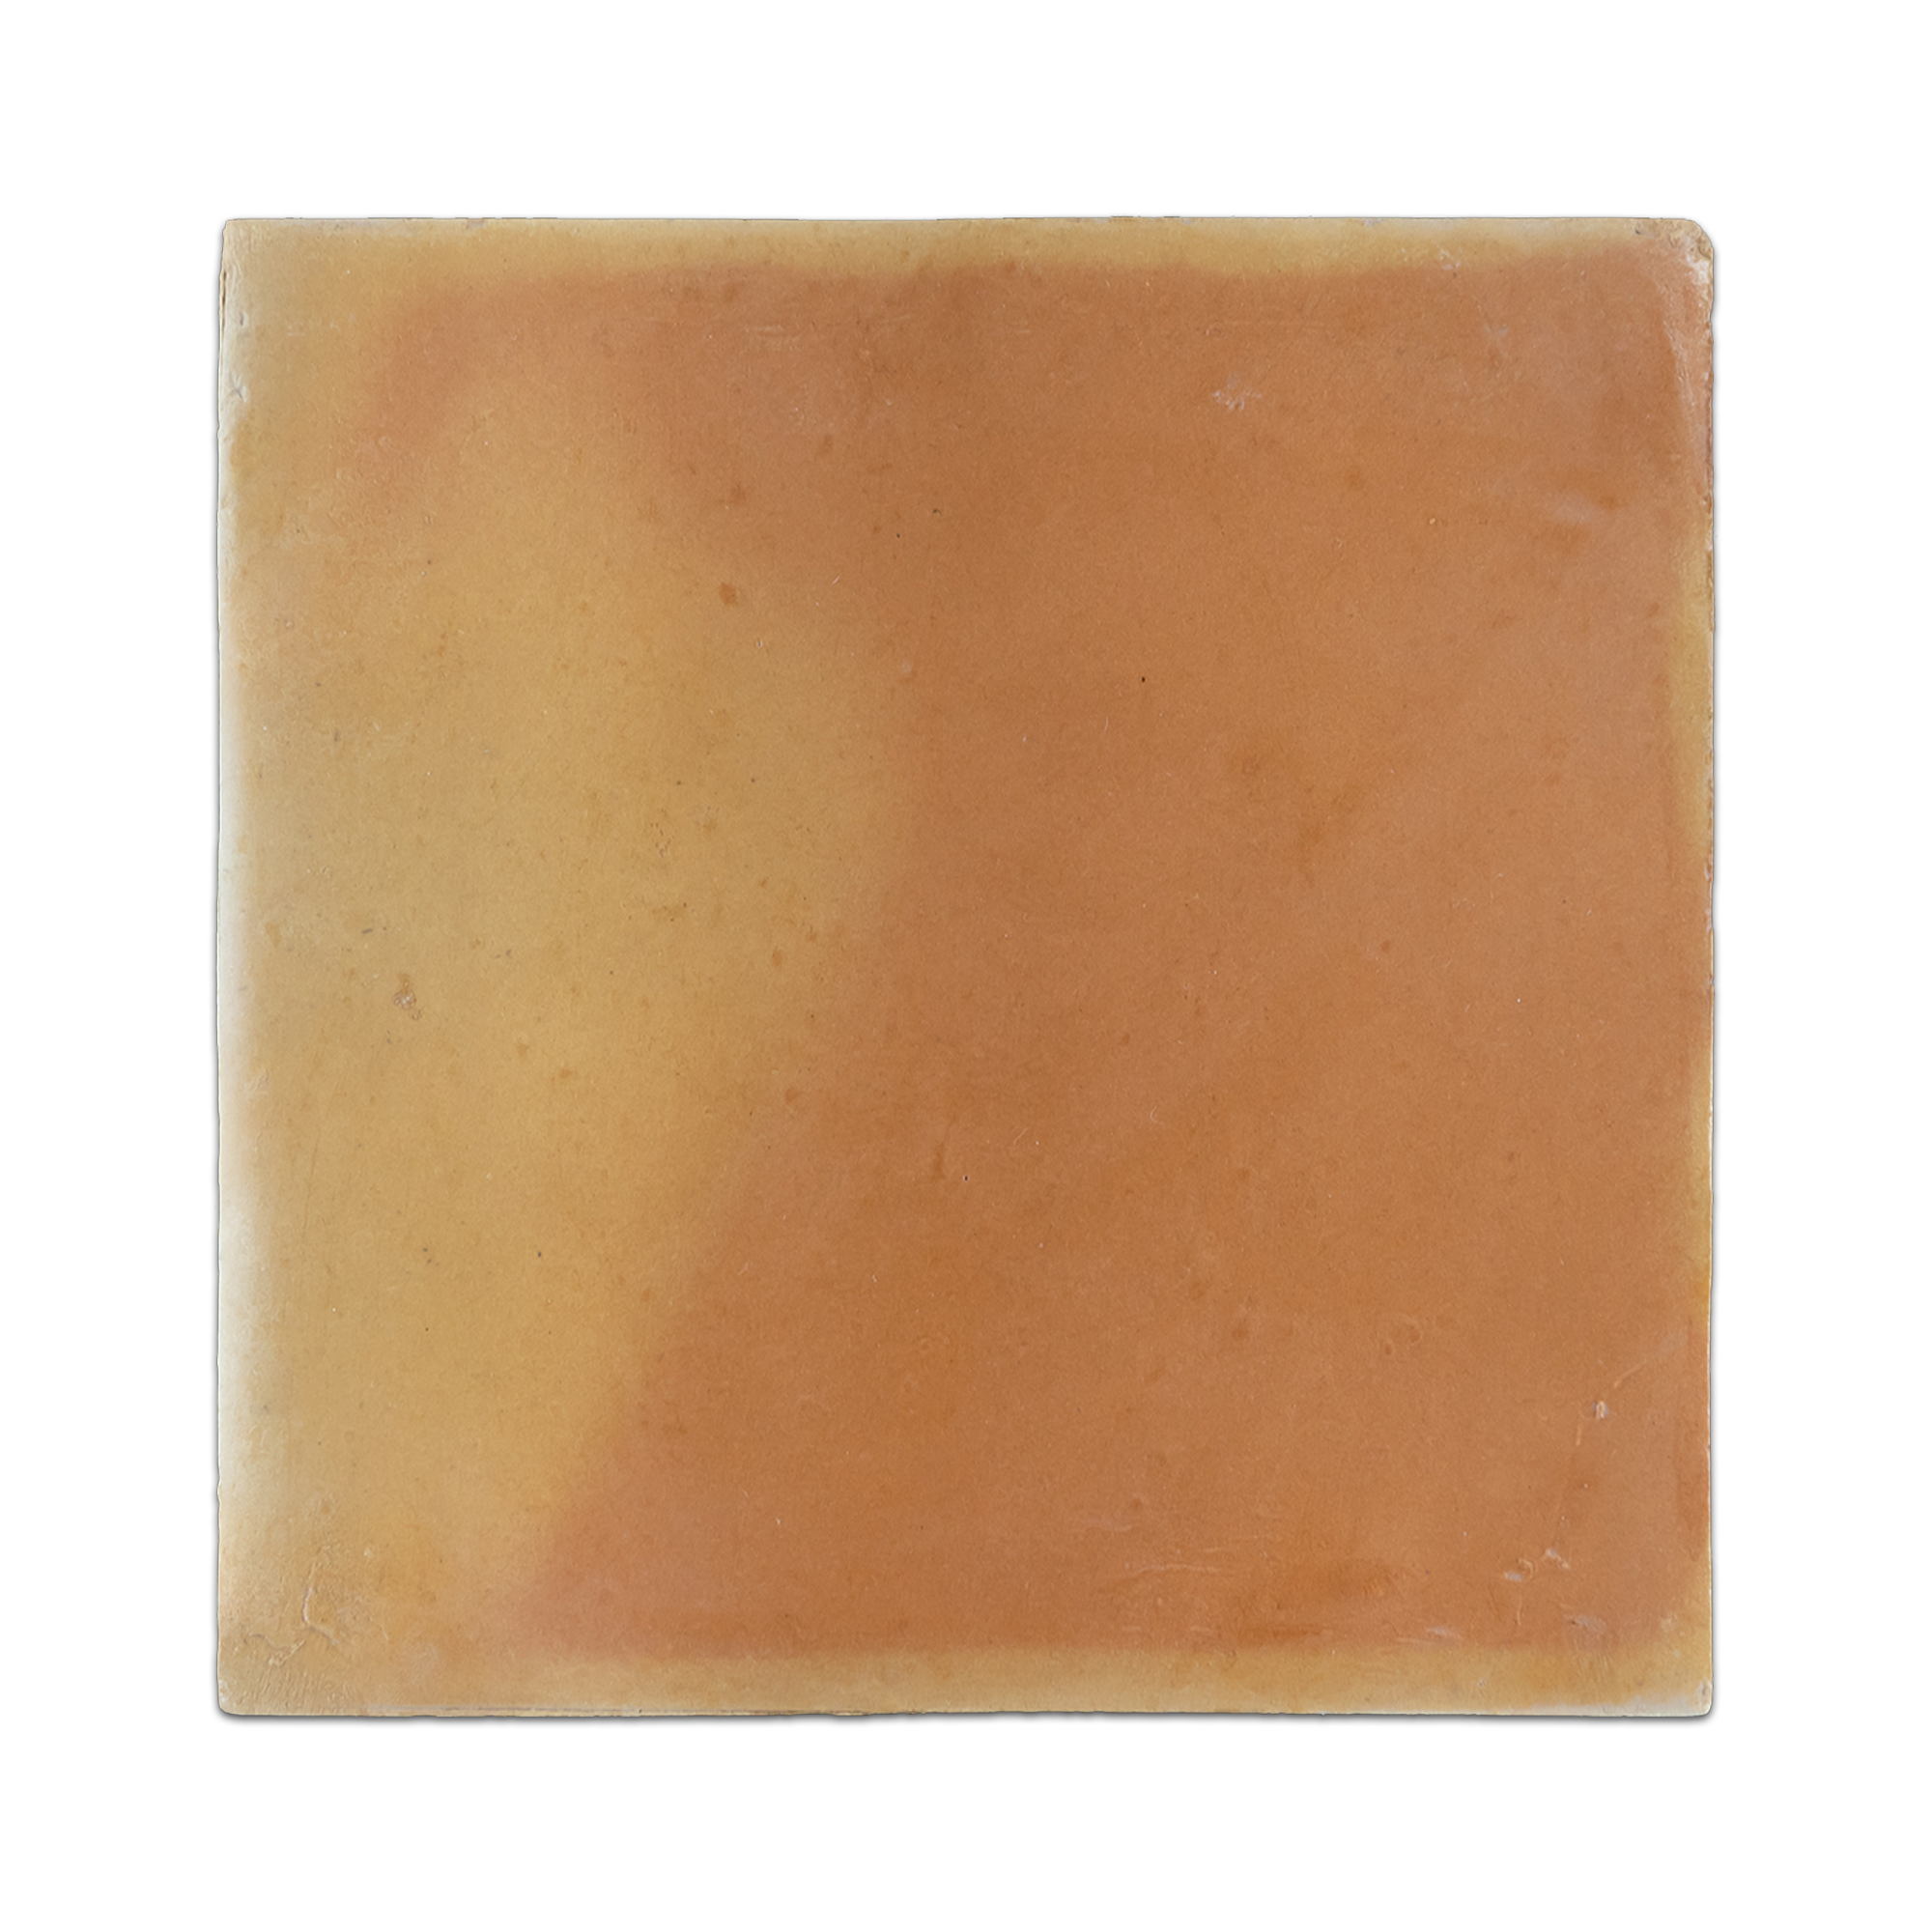 Elon Saltillo Clear Terracotta Square Field Tile 8.5x8.5x0.625 Semi Gloss - Surface Group International Product